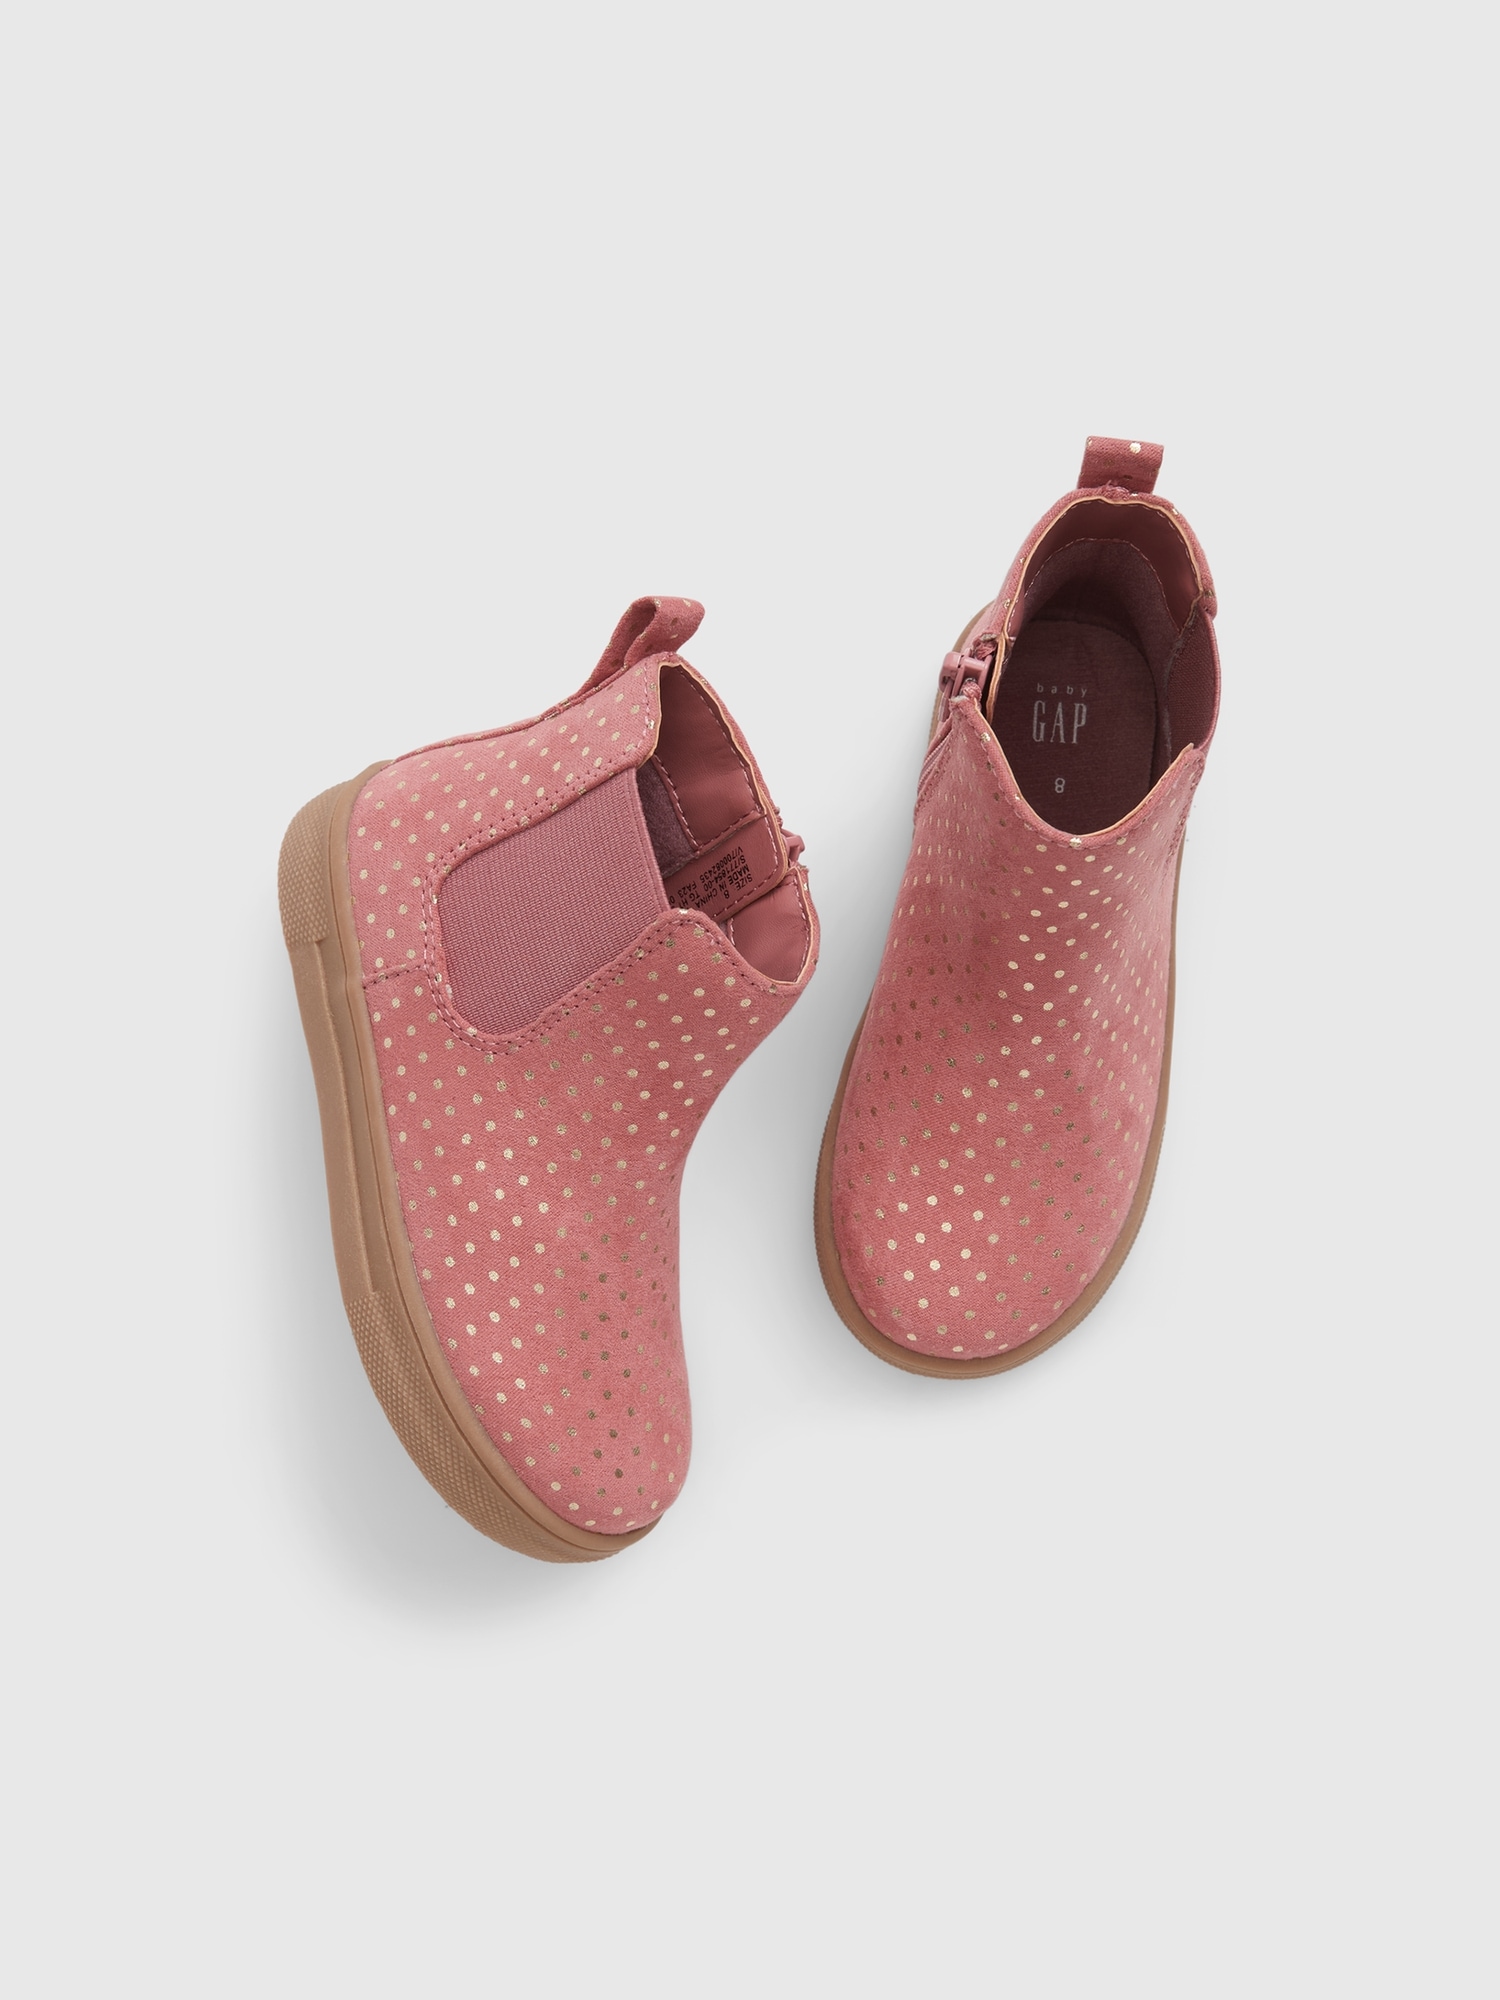 Gap Babies' Toddler High-top Sneakers In Pink Dots